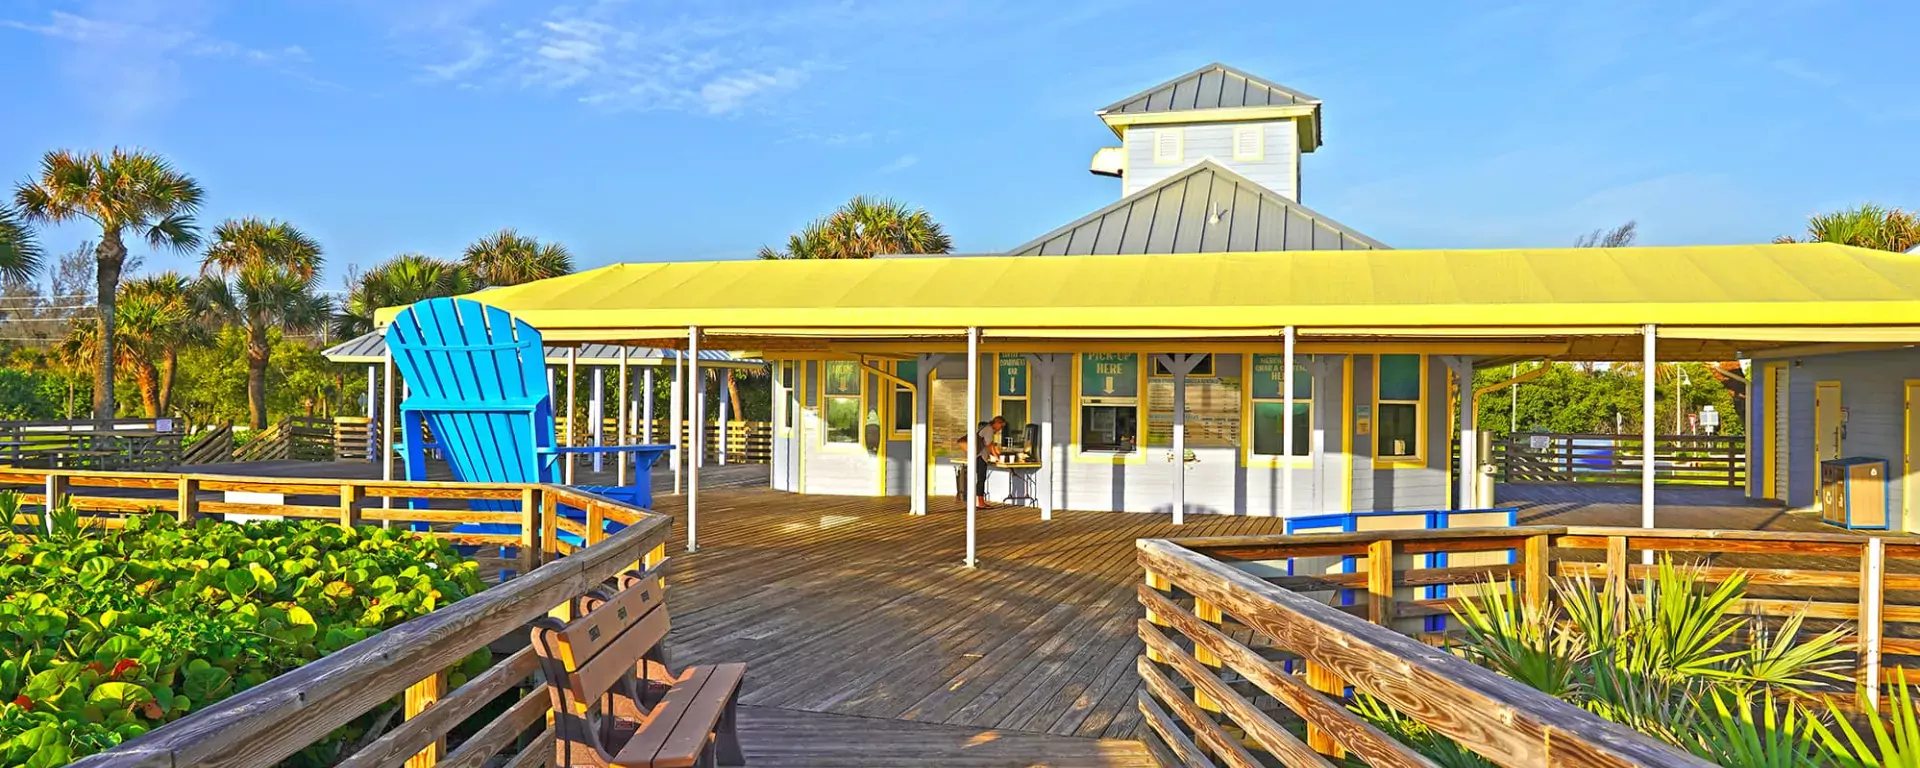 Image of the back deck of Sand Dune Café in Jensen Beach, FL. 